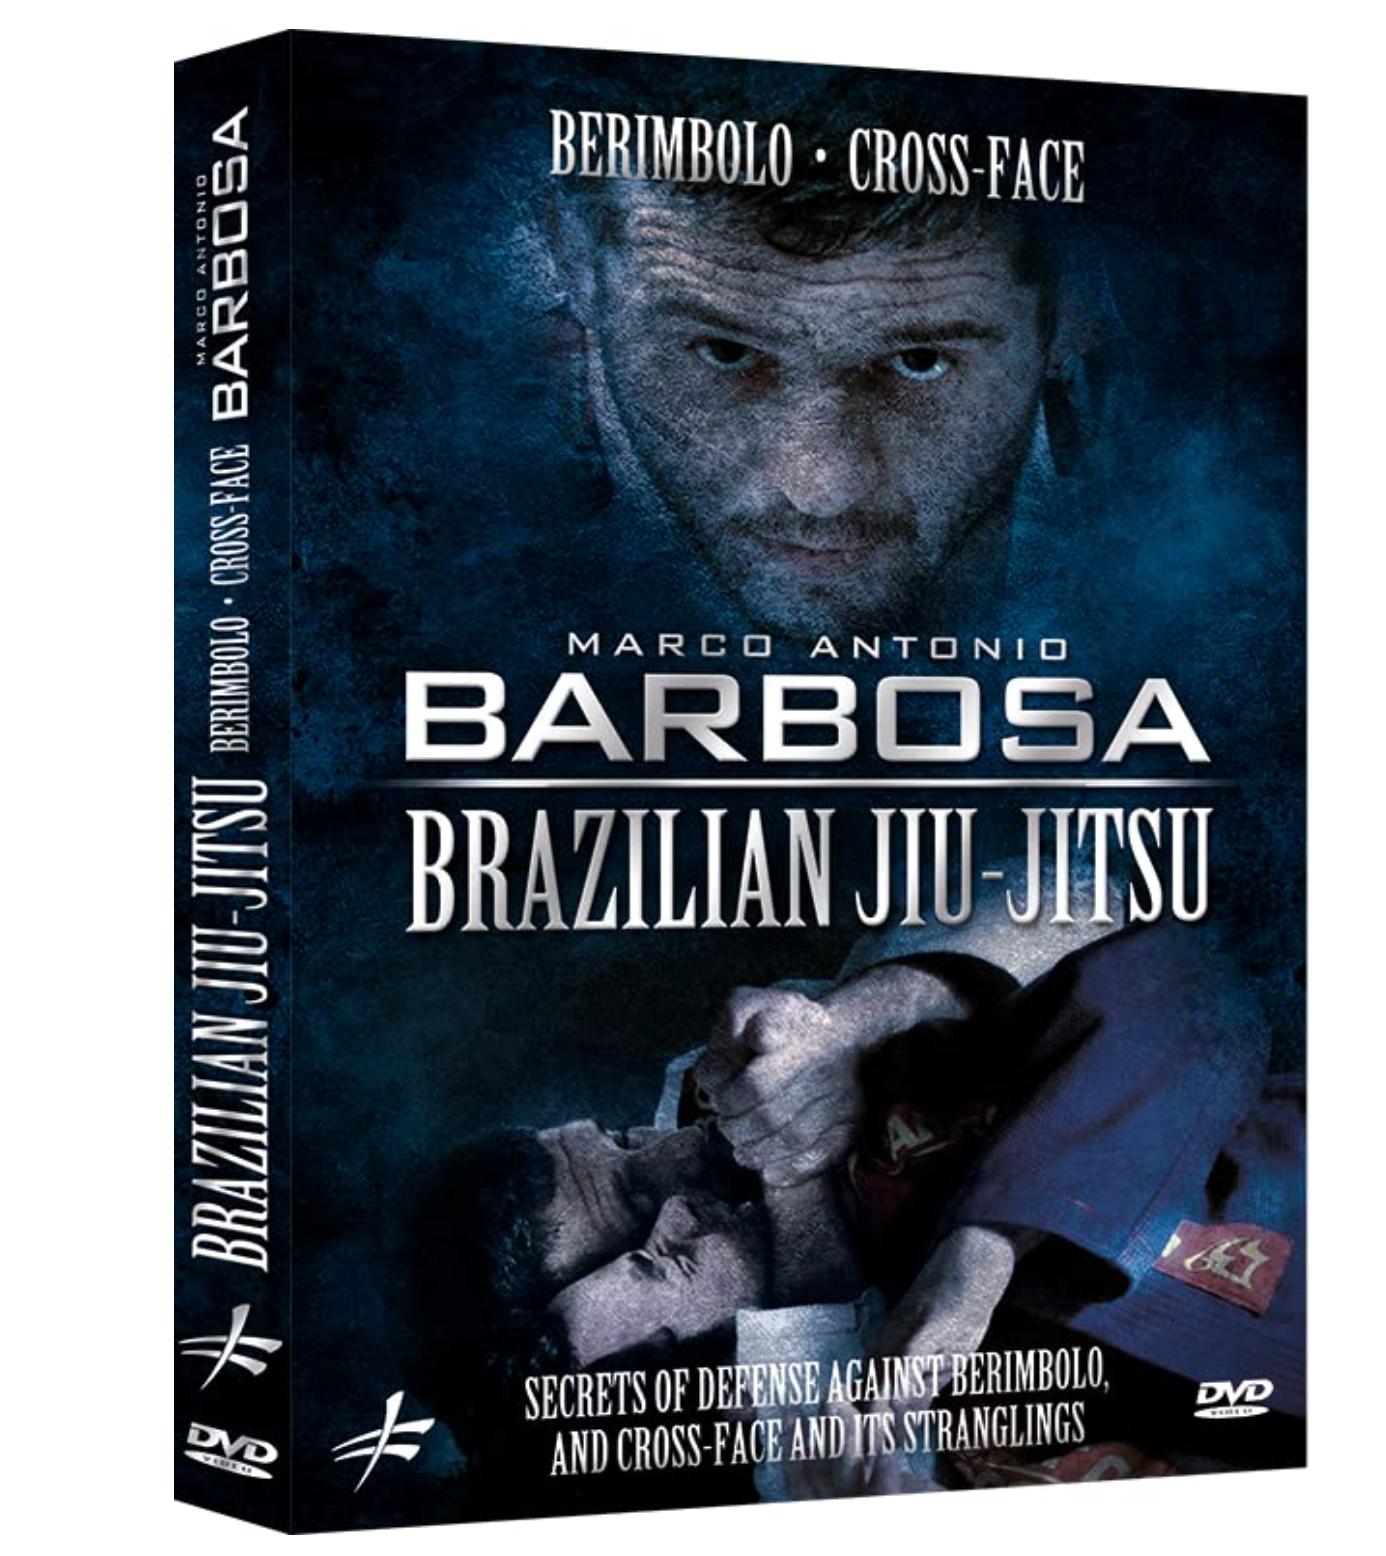 Berimbolo & Cross Face Secrets & Strategies DVD by Marco Antonio Barbosa